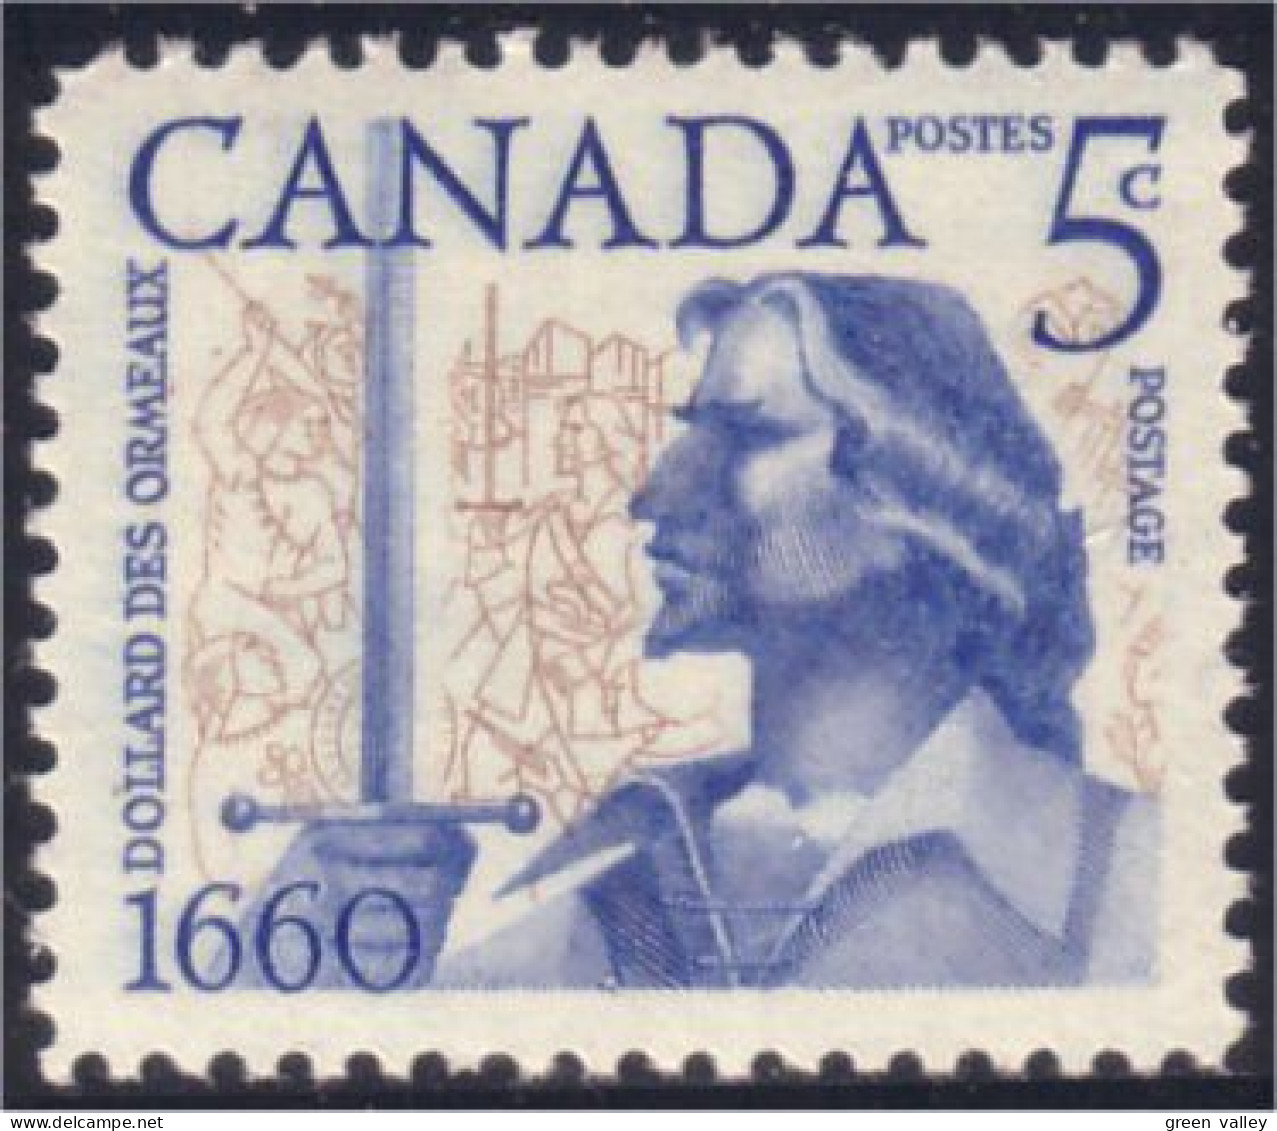 Canada Dollard Des Ormeaux MNH ** Neuf SC (03-90a) - Ungebraucht